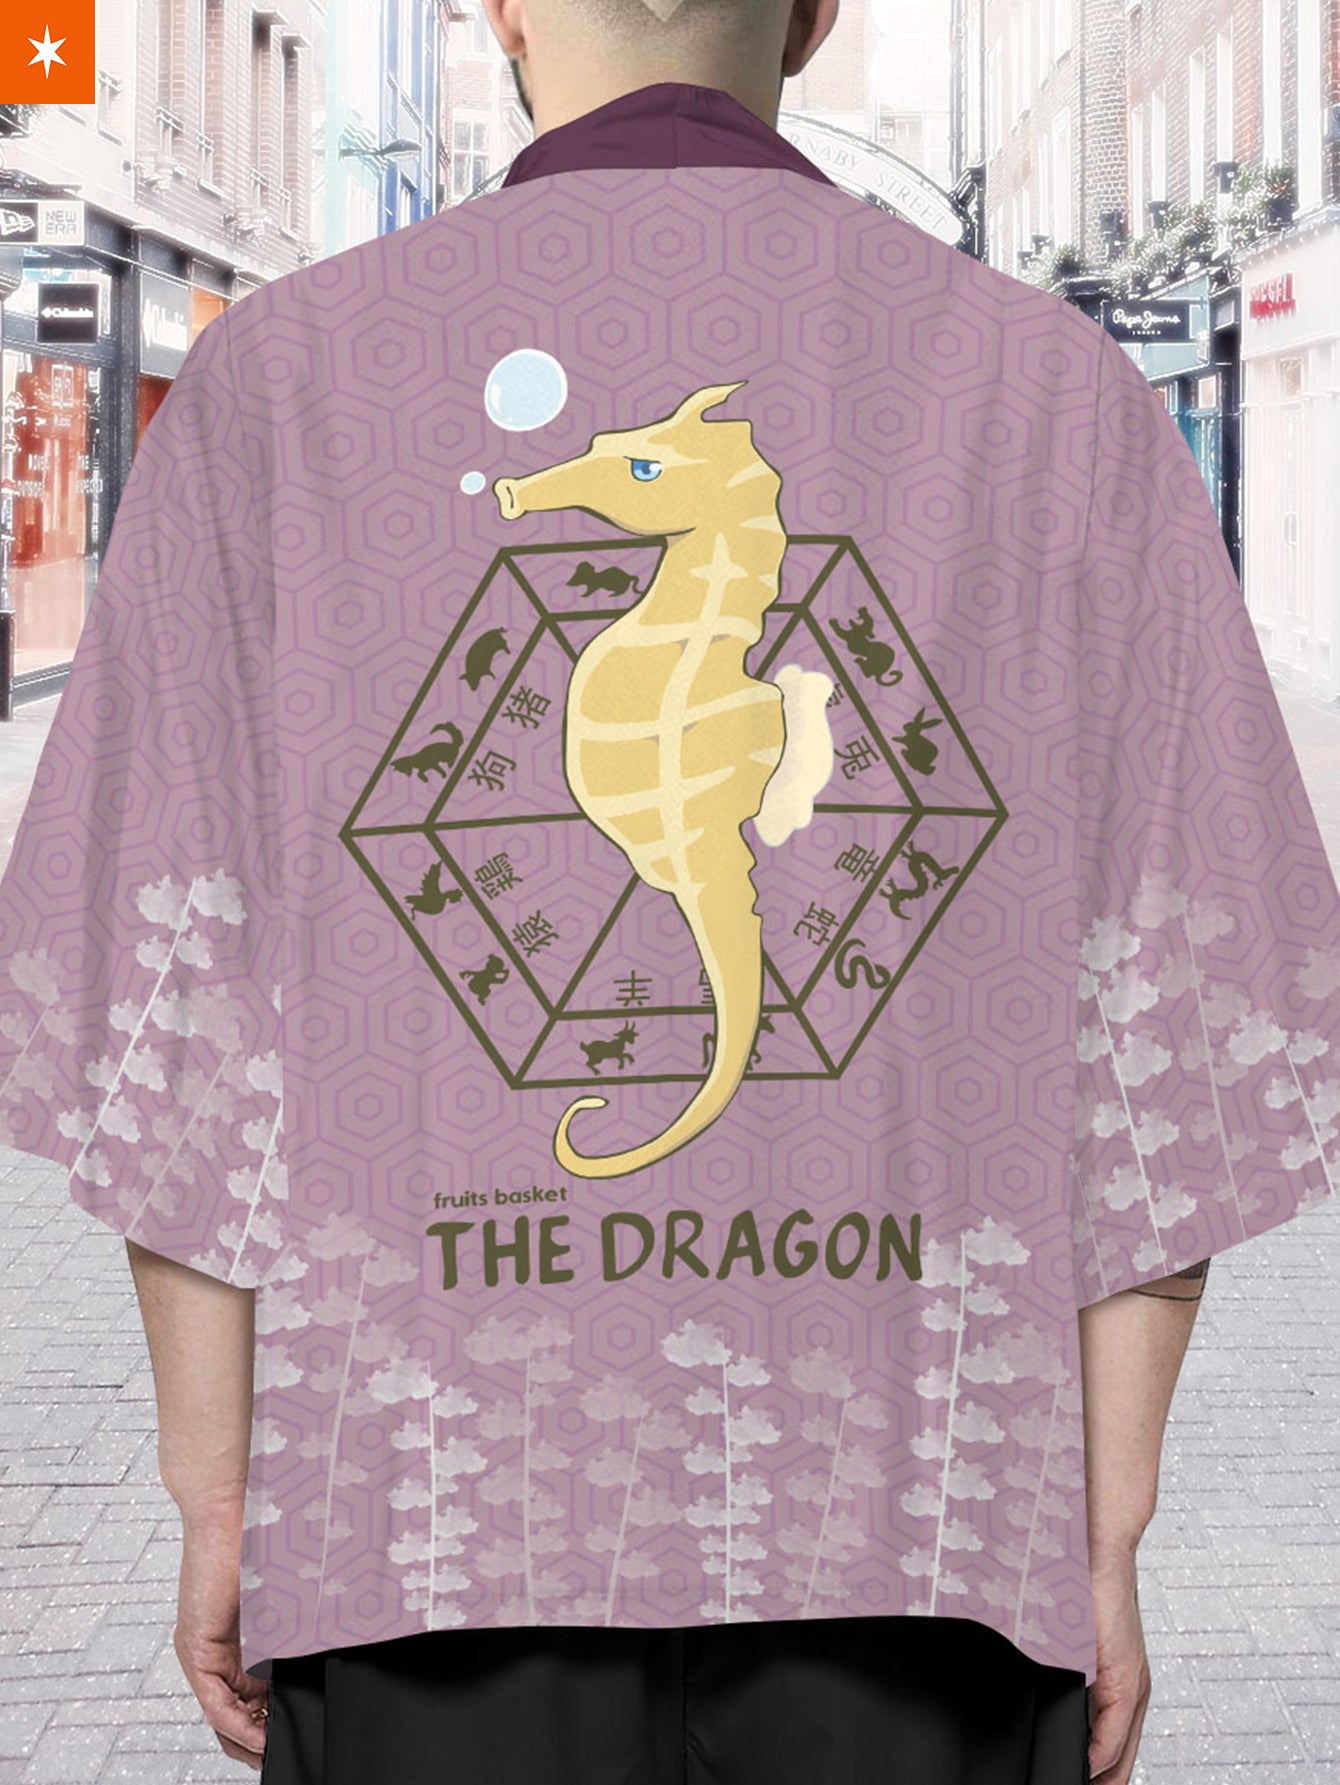 Fandomaniax - Hatori The Dragon Kimono